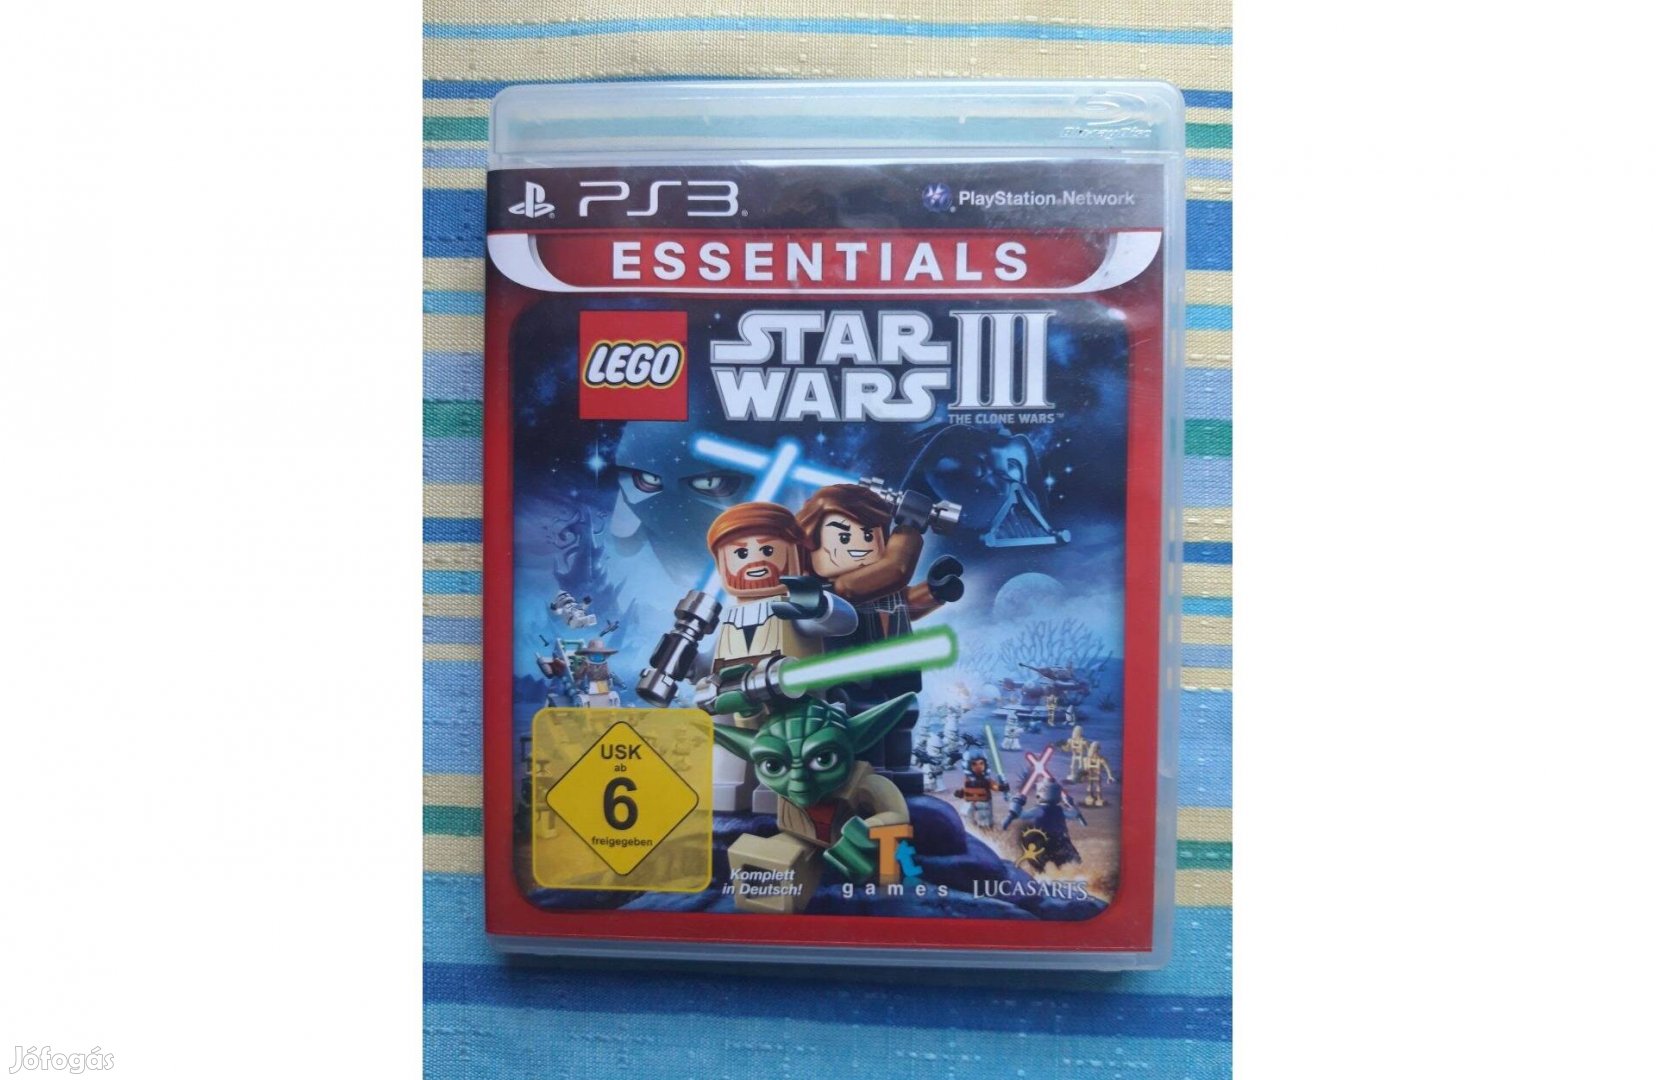 PS3 Lego Star Wars III The Clone Wars